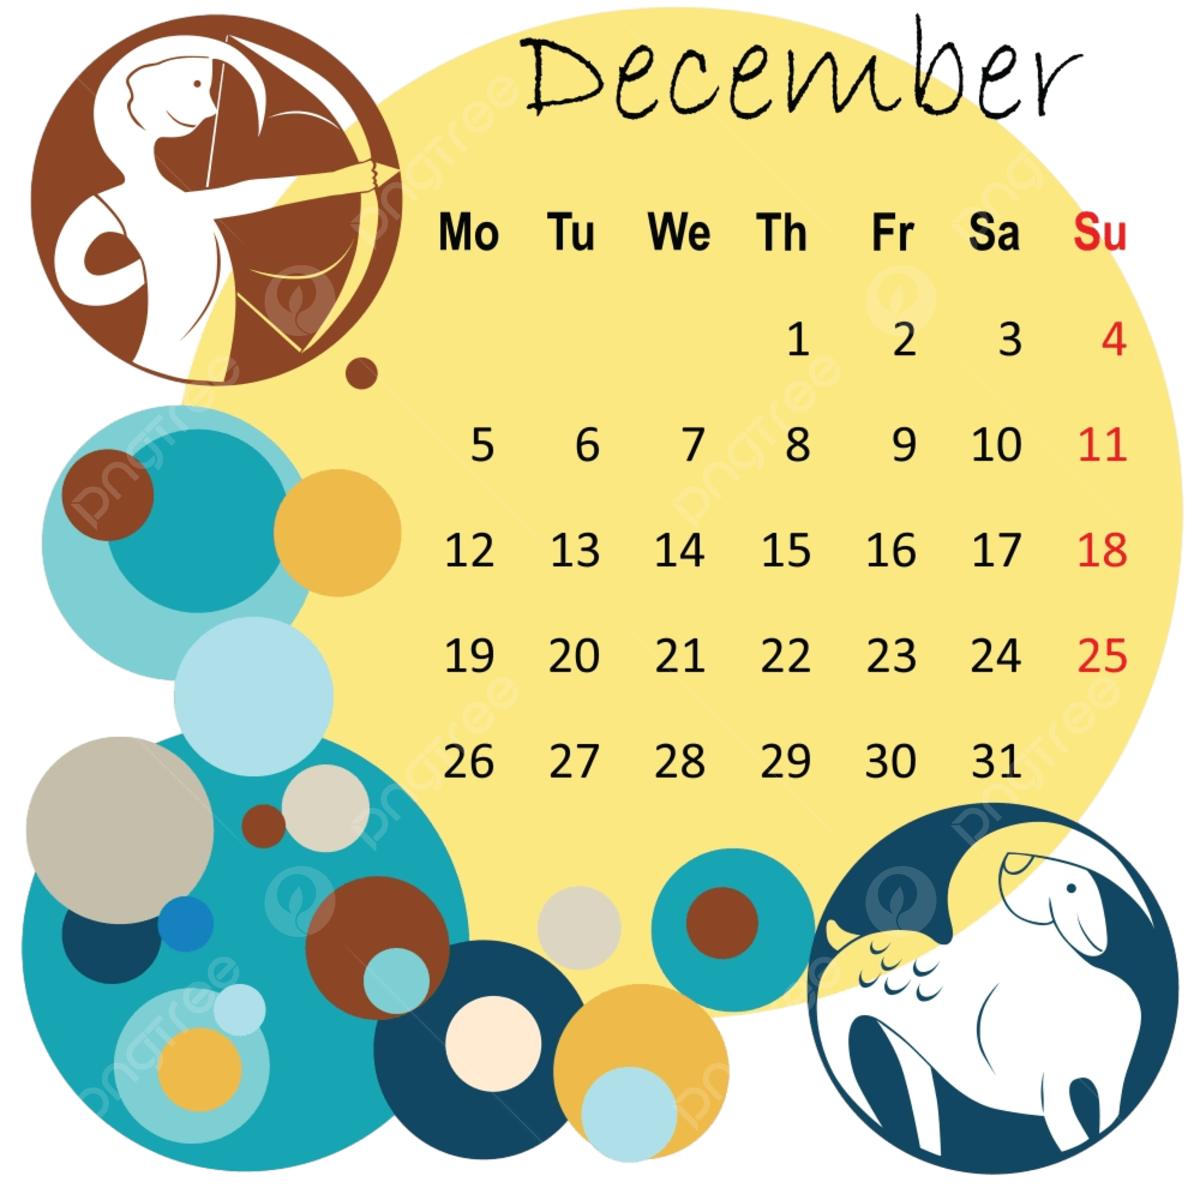 December calendar vector design images calendar december with zodiac signs color vector date png image for free download